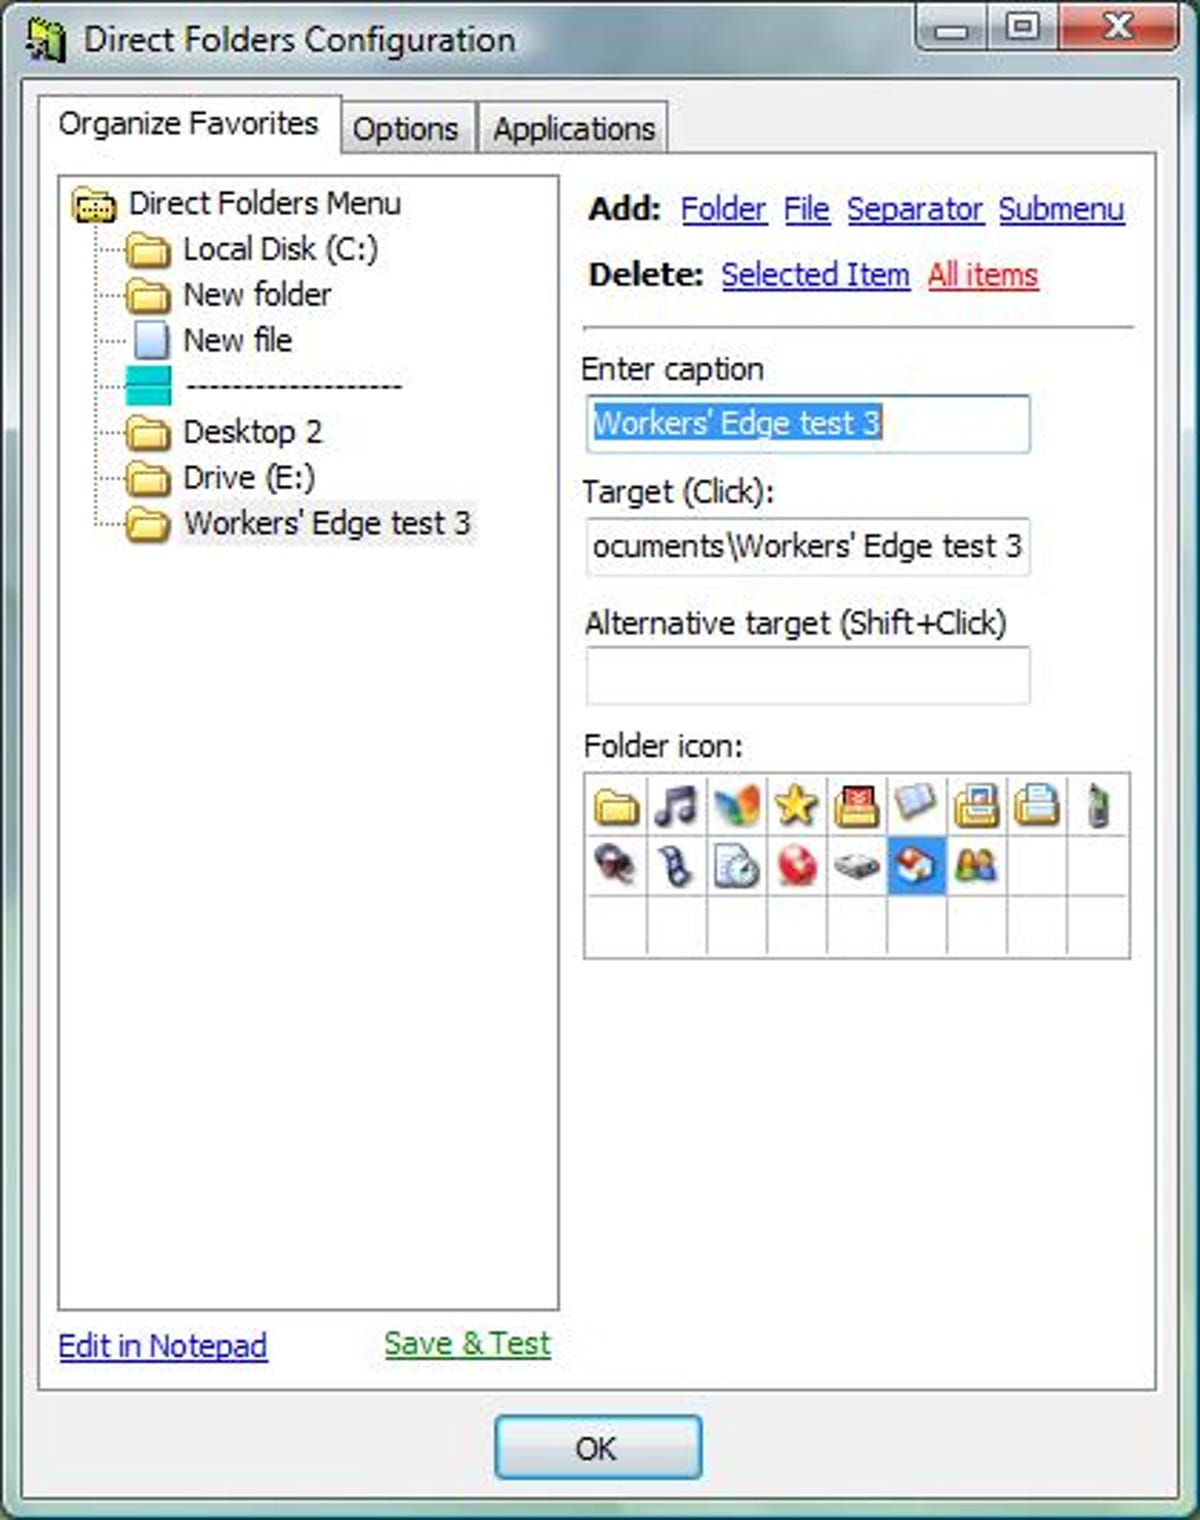 Direct Folders Configure dialog box